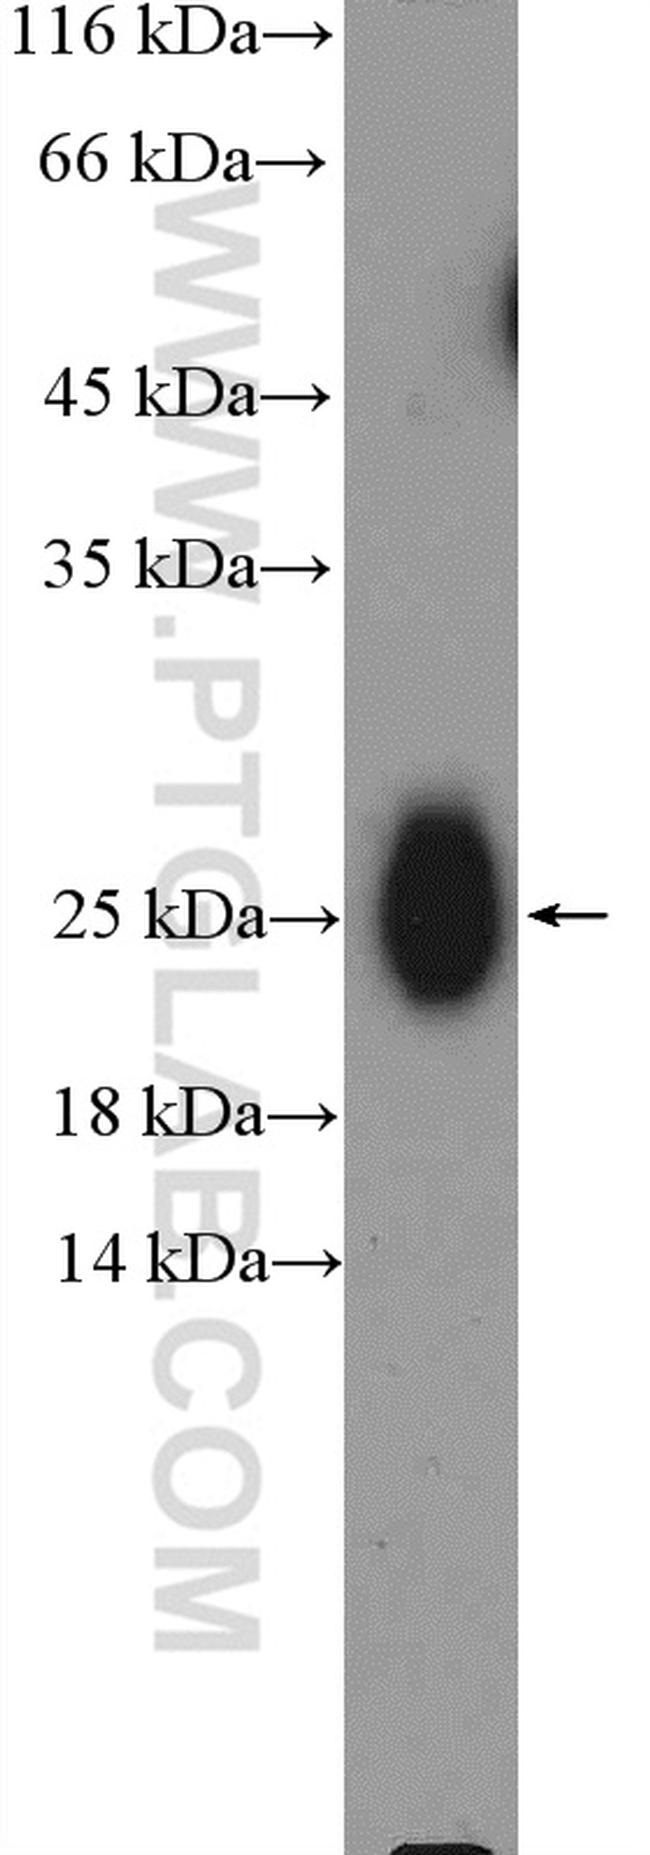 IgG light chain (Kappa) Antibody in Western Blot (WB)